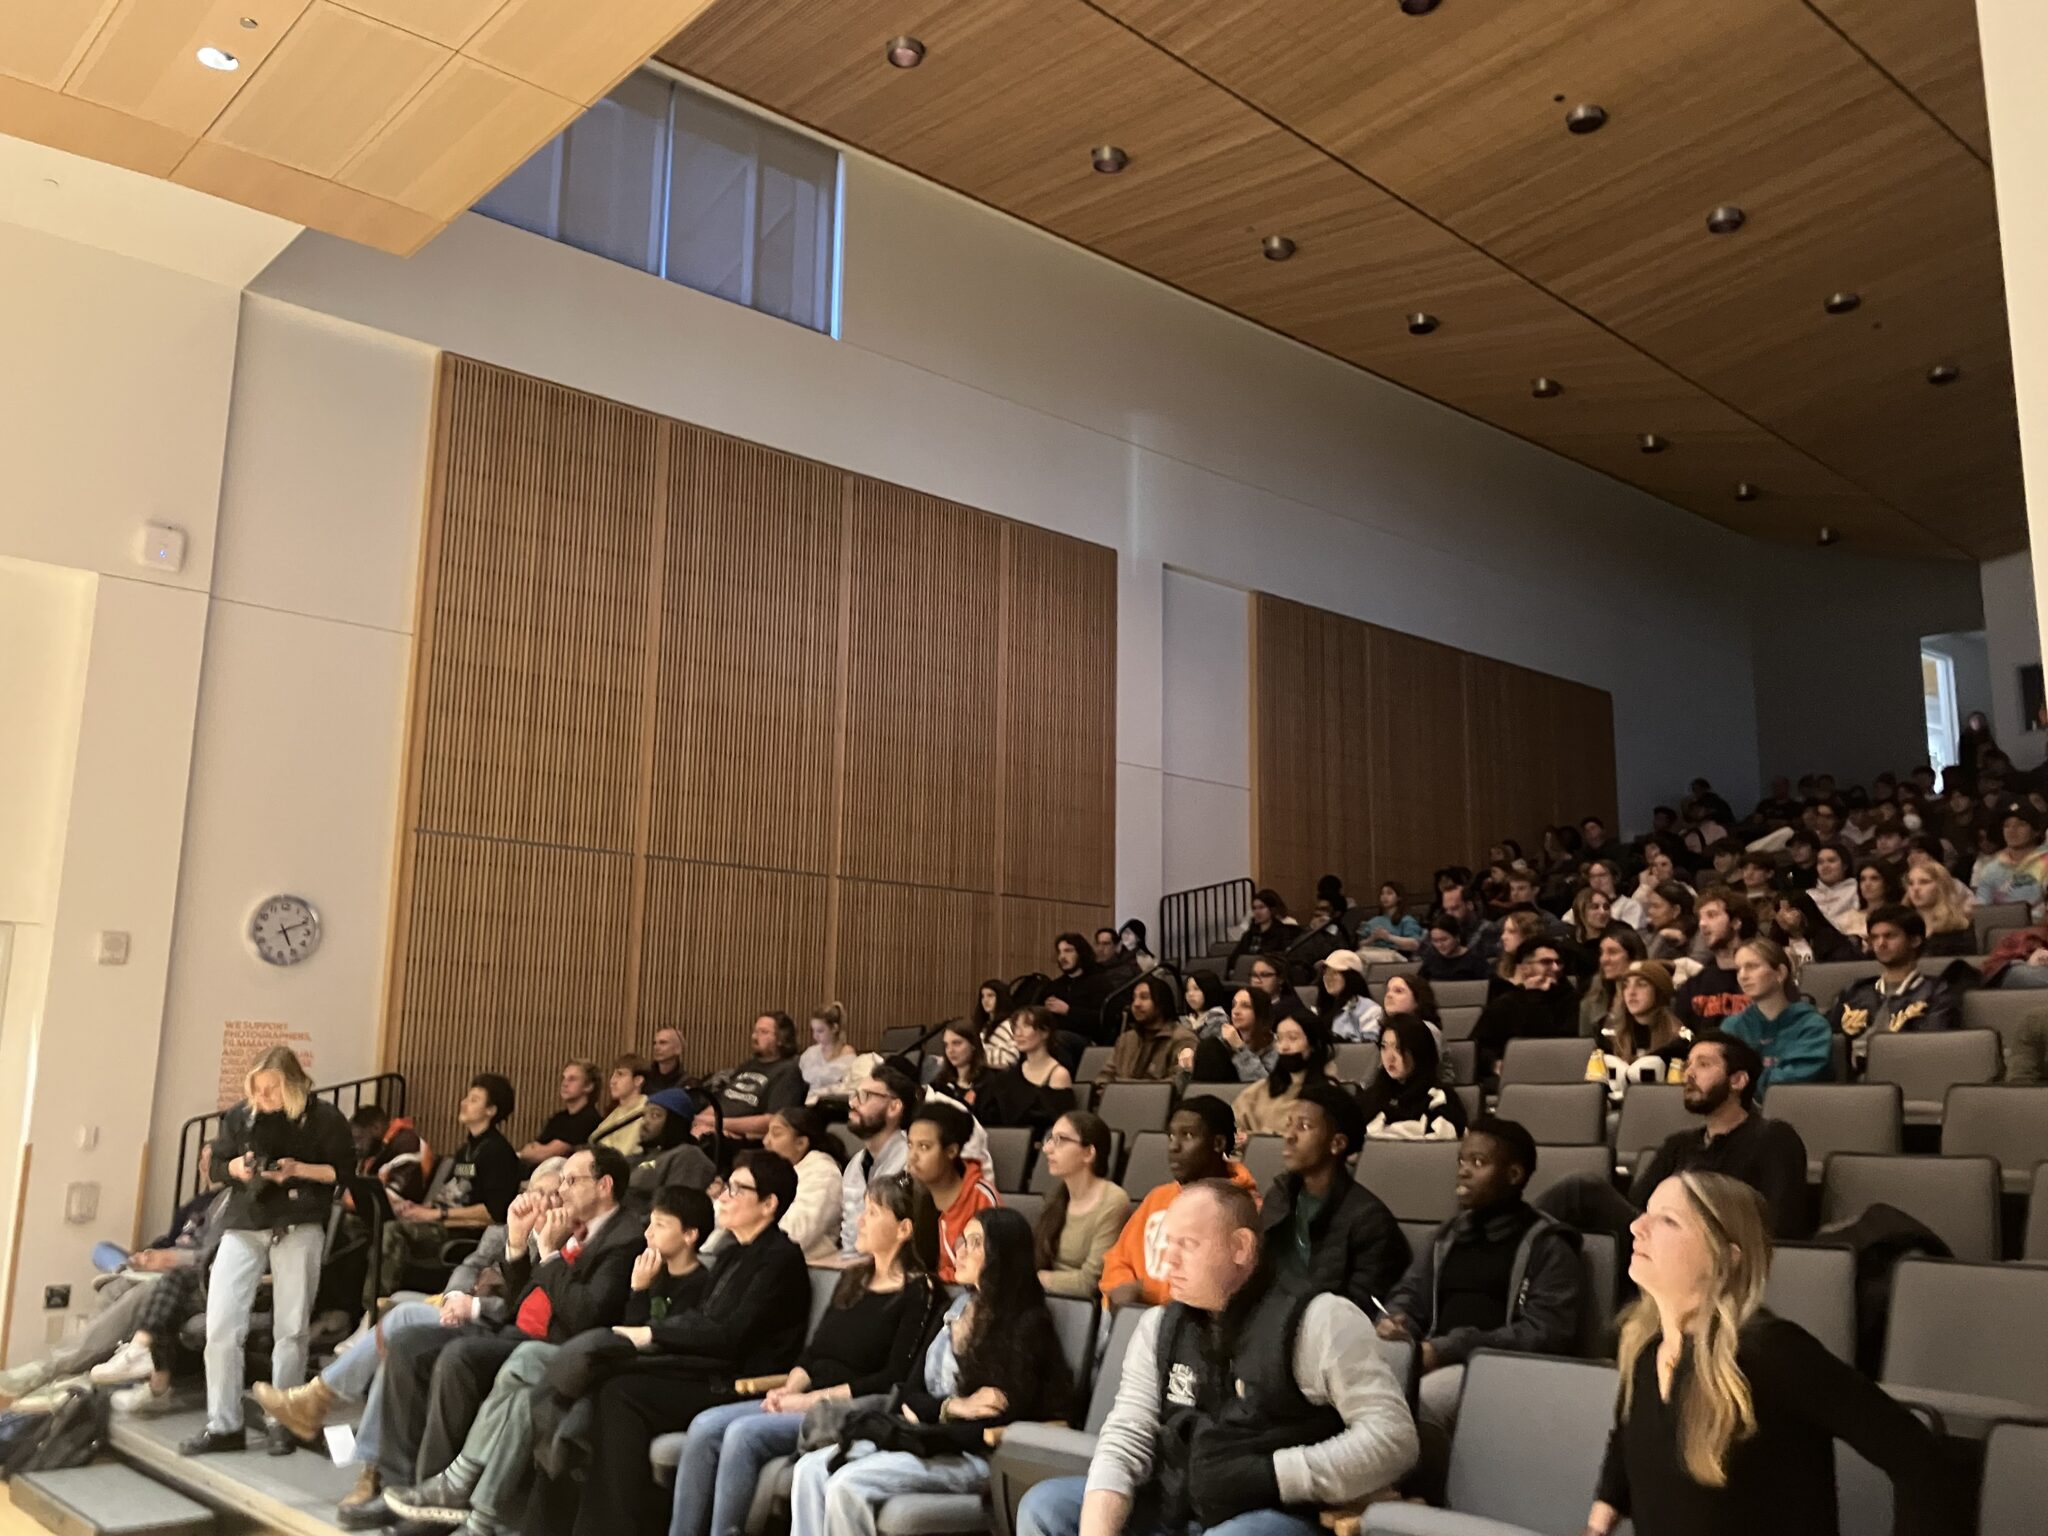 a crowd in an auditorium